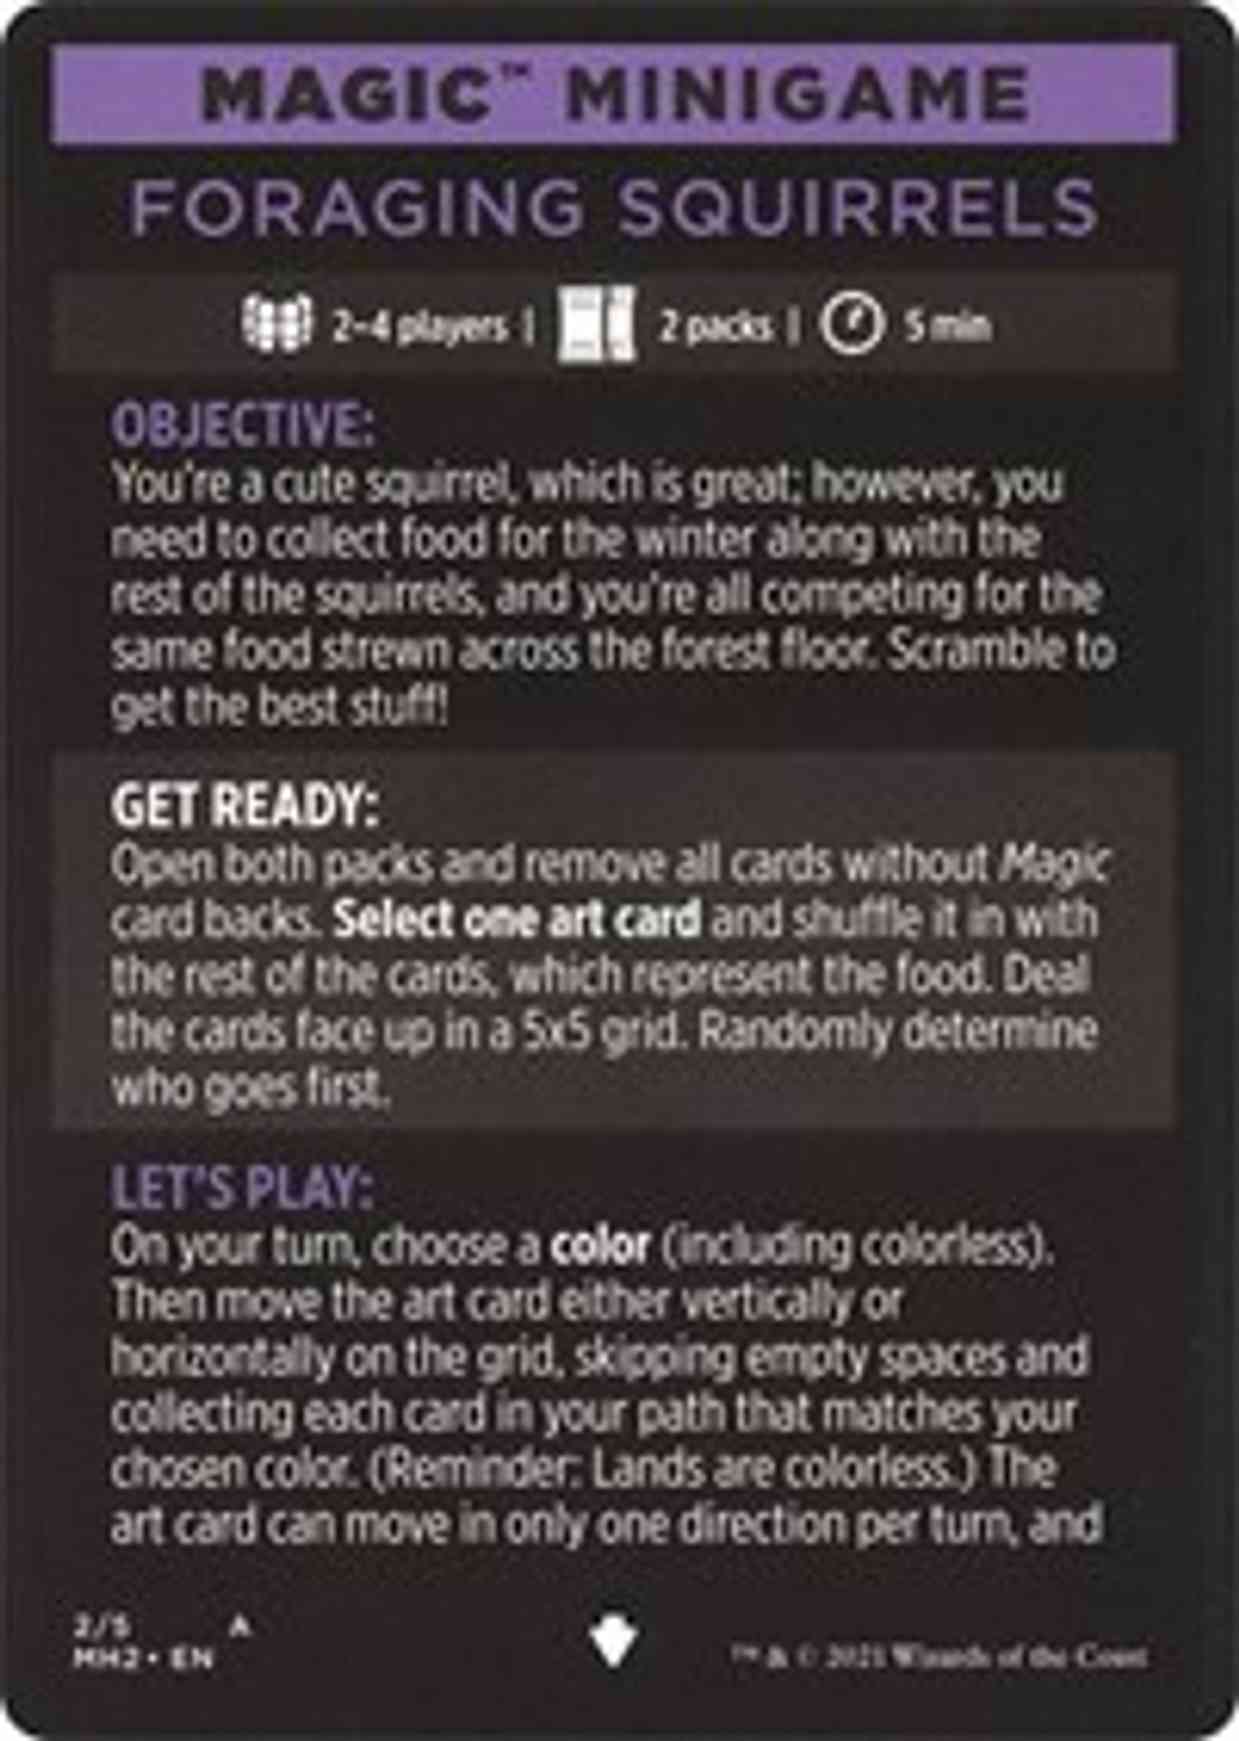 Magic Minigame: Foraging Squirrels magic card front